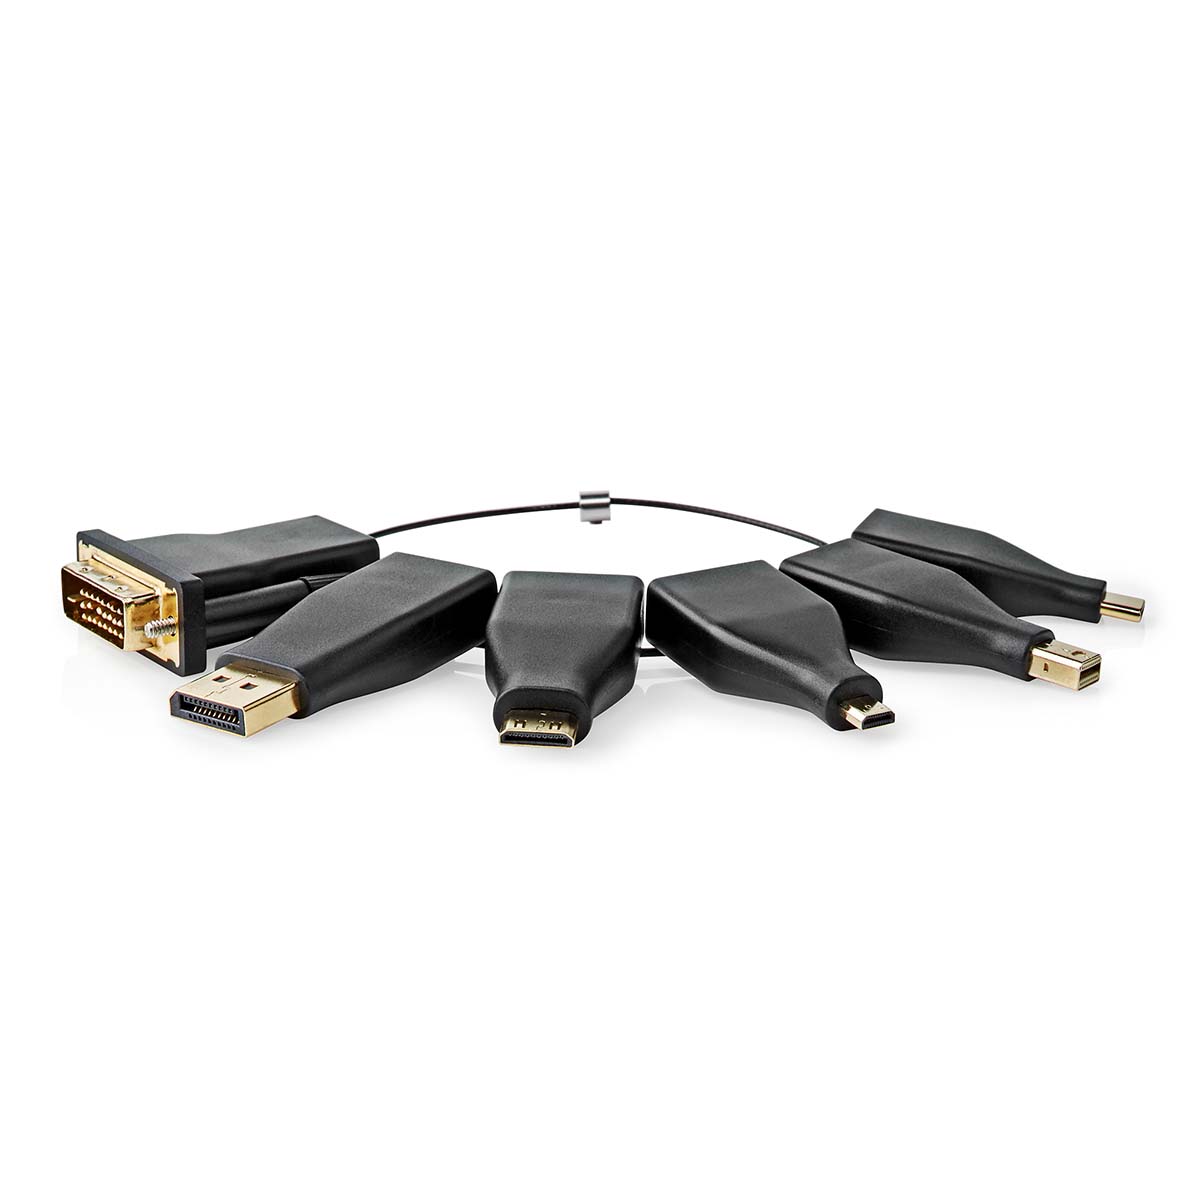 Nedis Adaptateur HDMI Femelle vers HDMI Femelle - HDMI - Garantie 3 ans LDLC